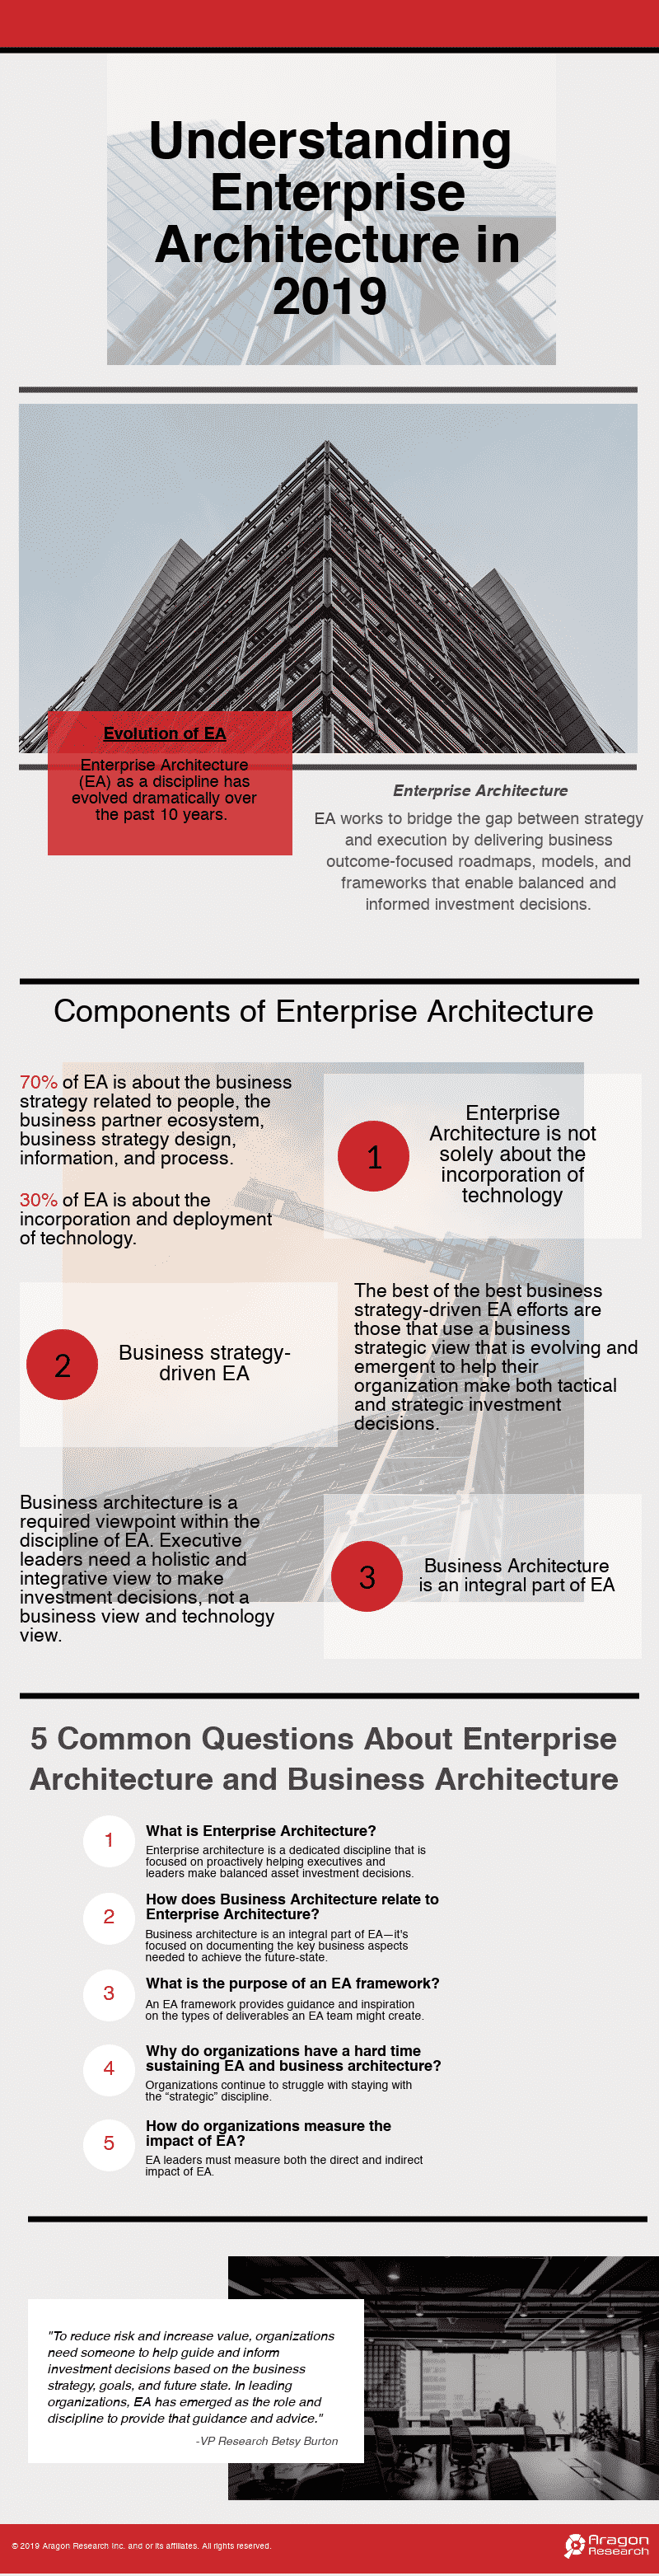 Enterprise Architecture Infographic